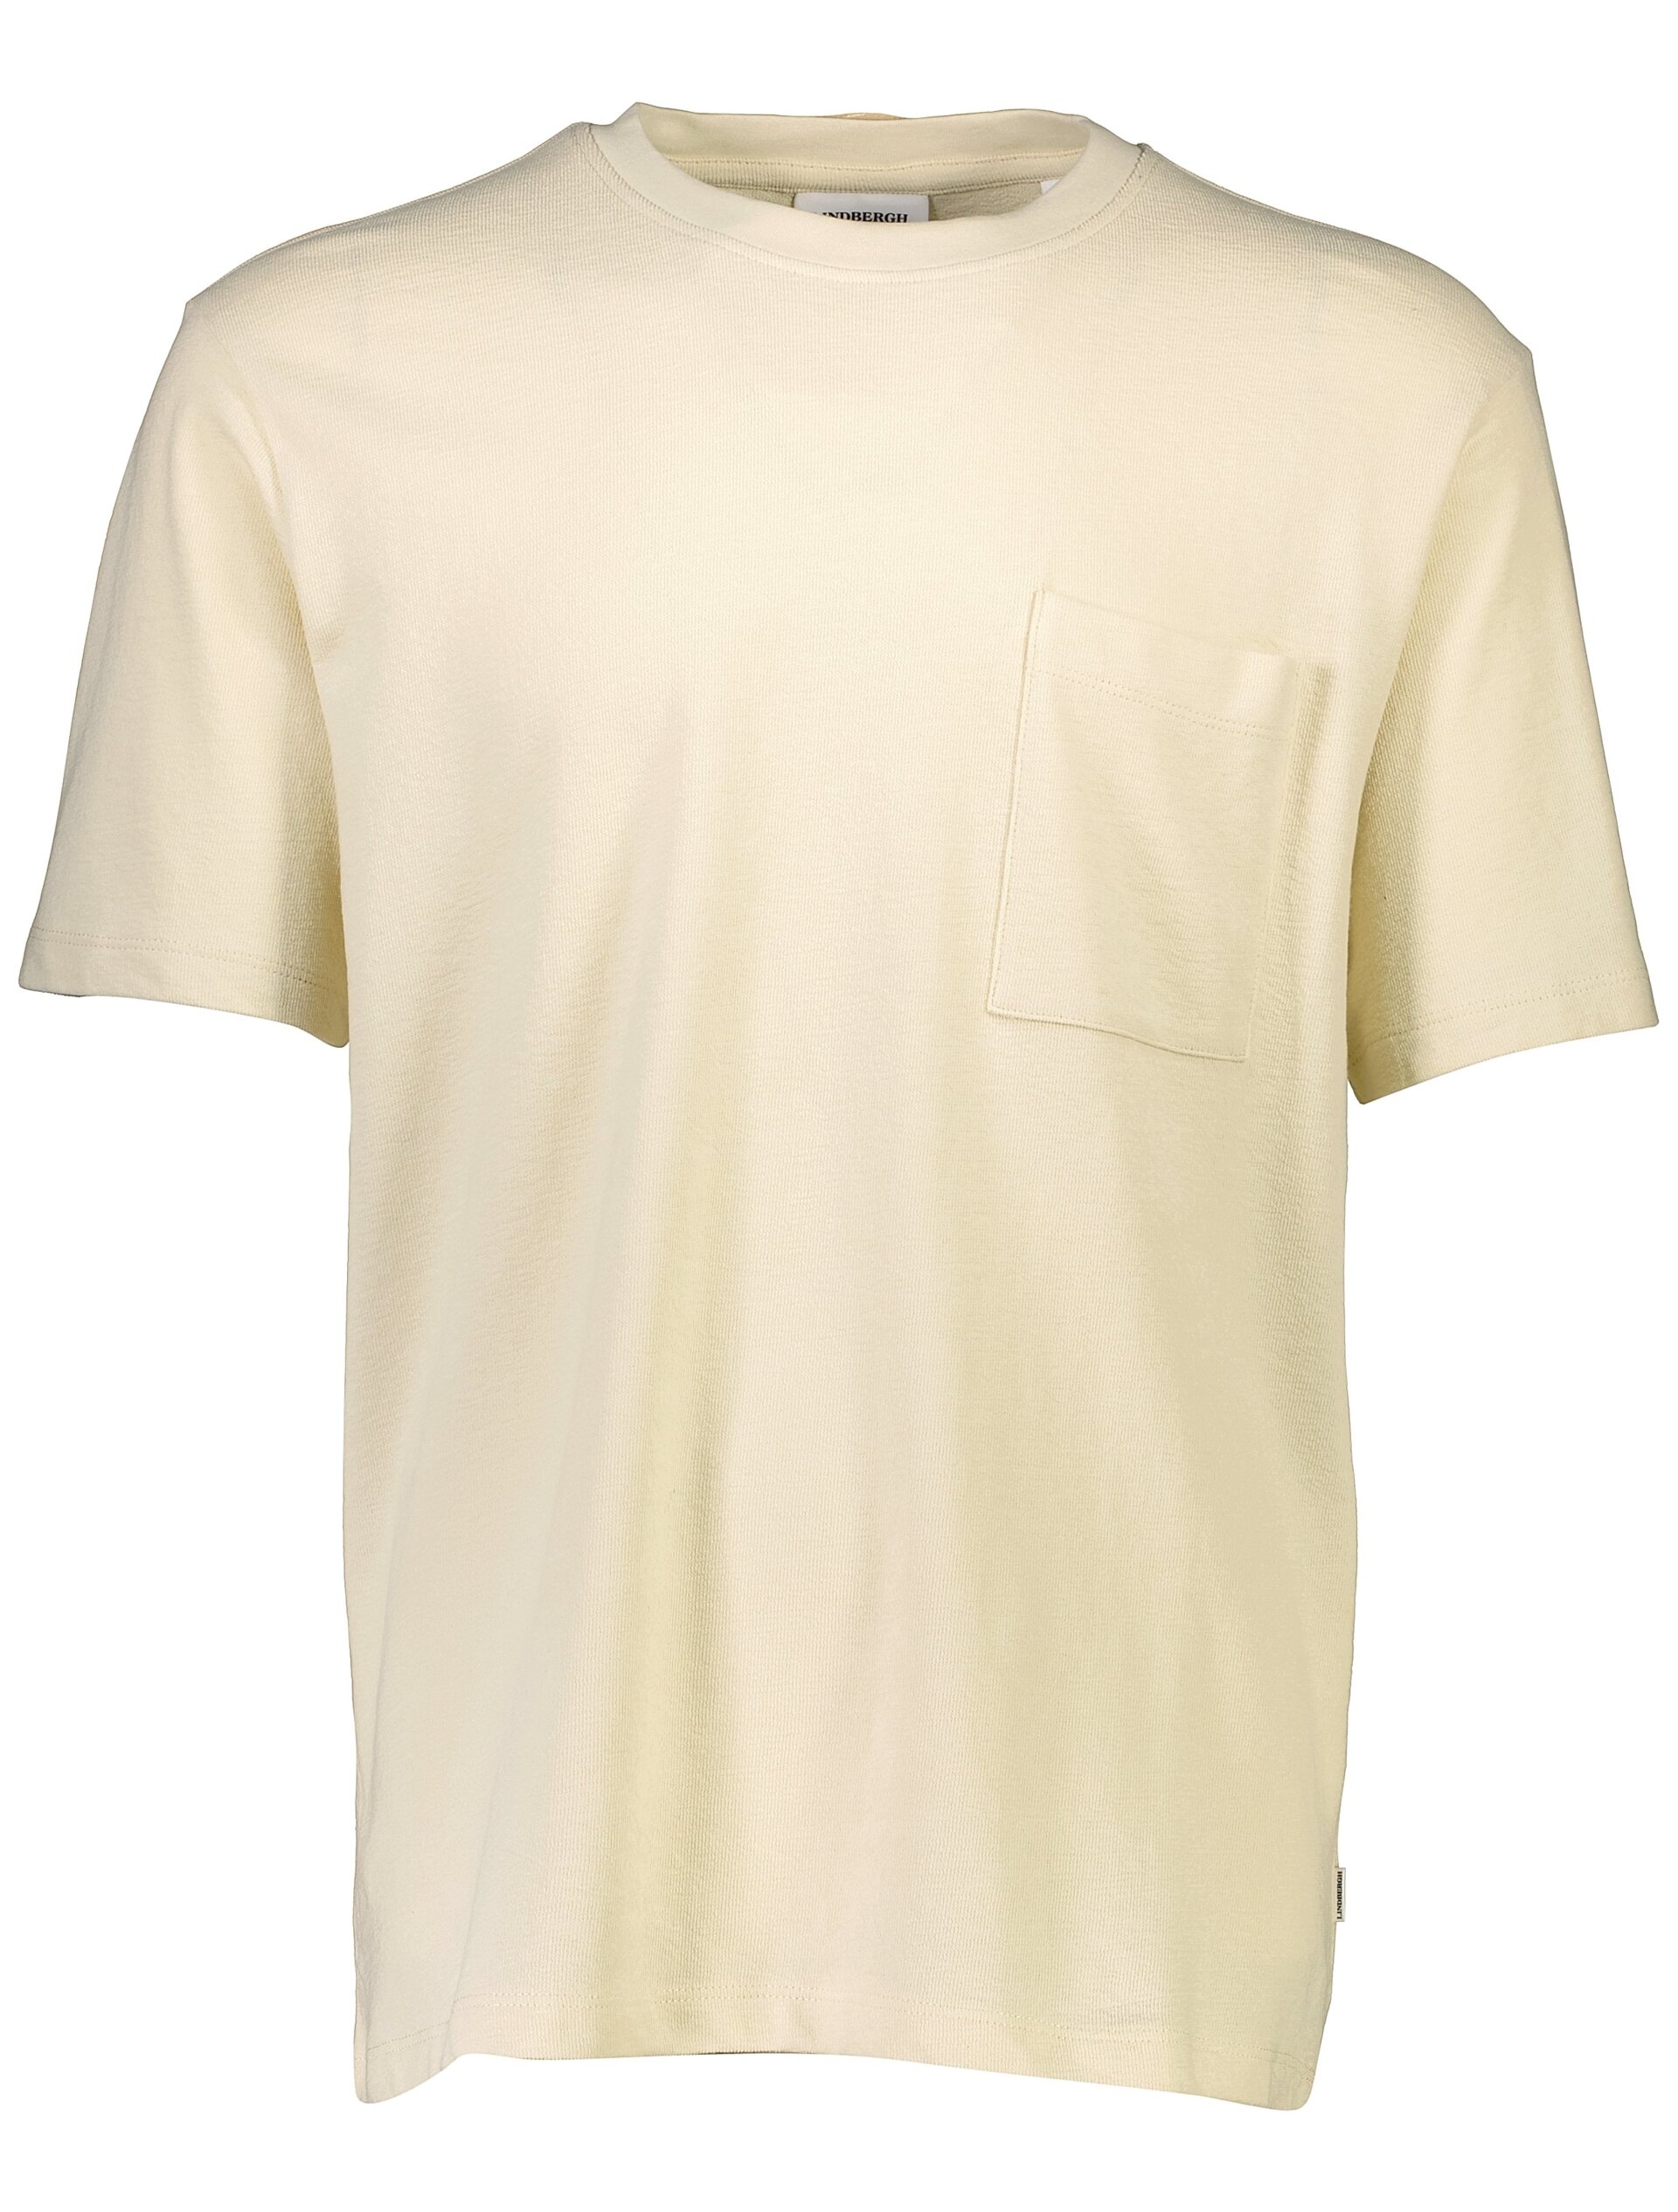 Lindbergh T-shirt grau / lt stone